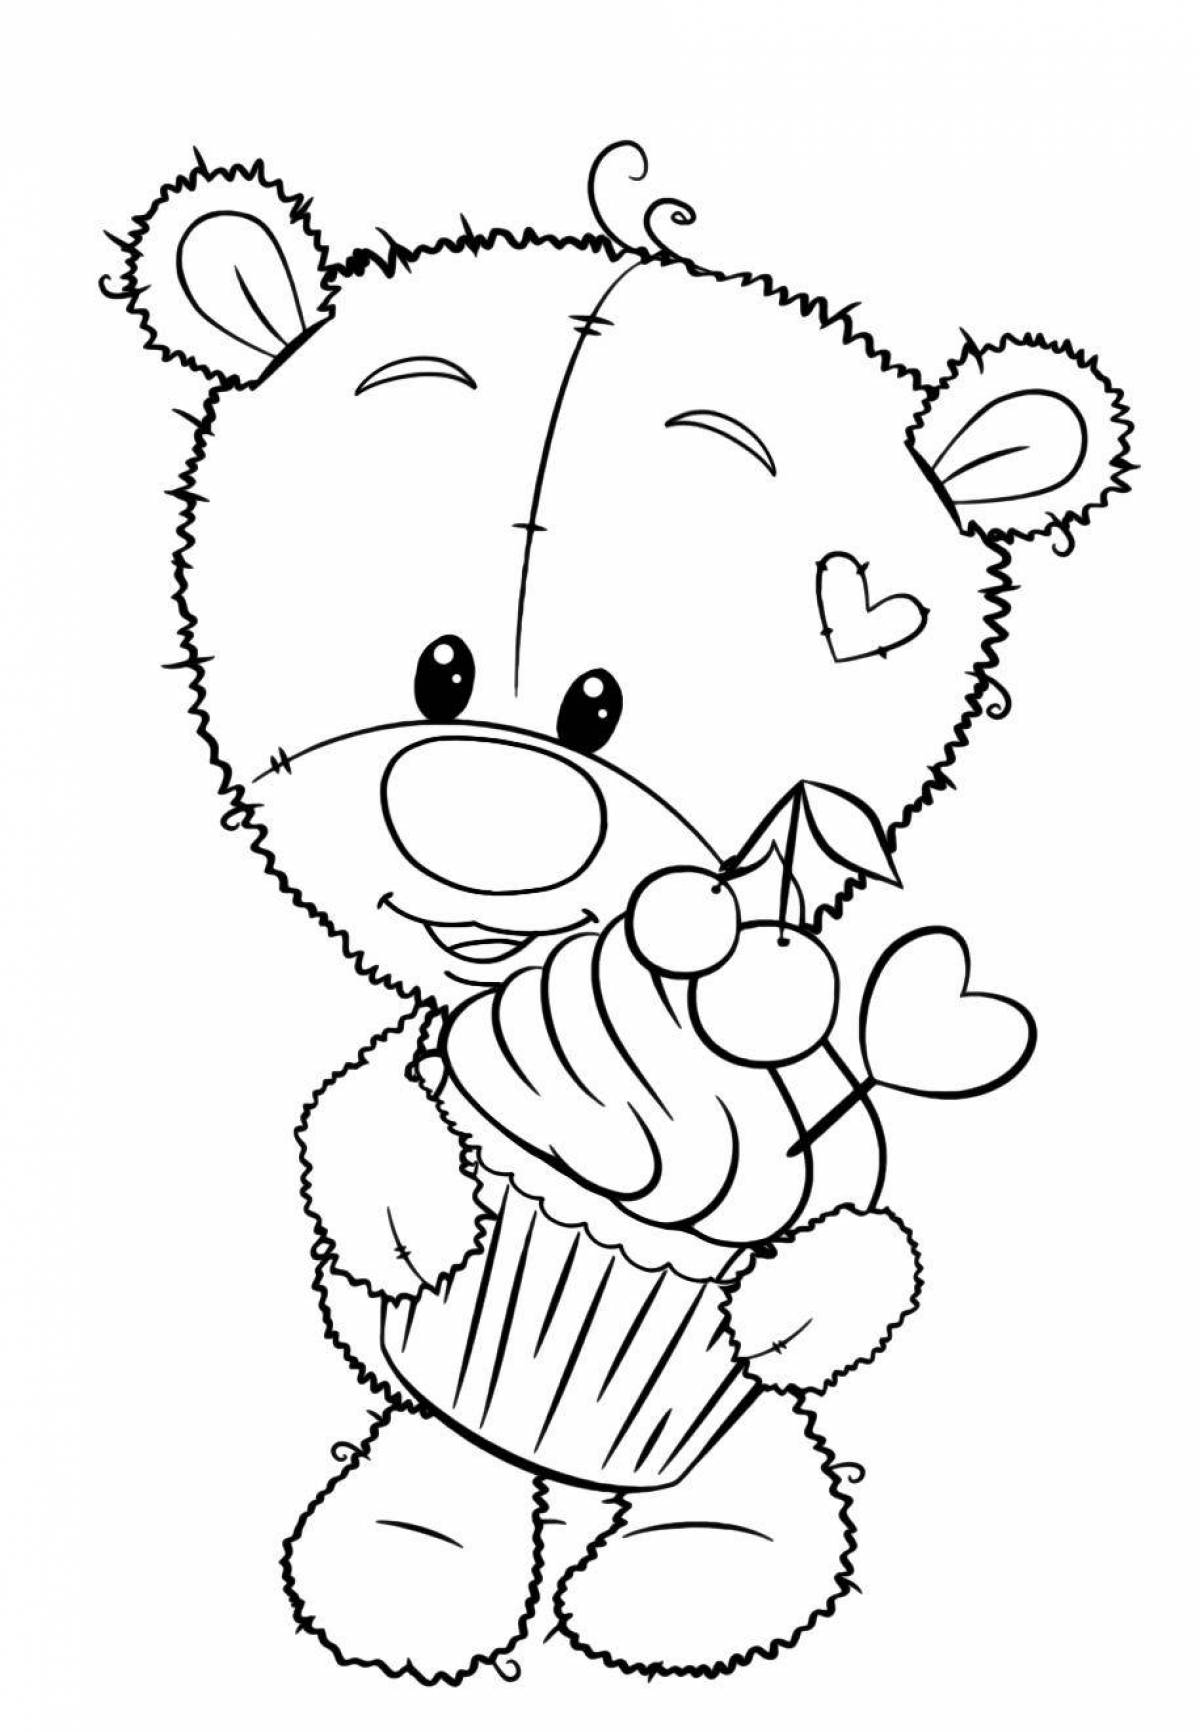 Glitter teddy bear coloring book for girls